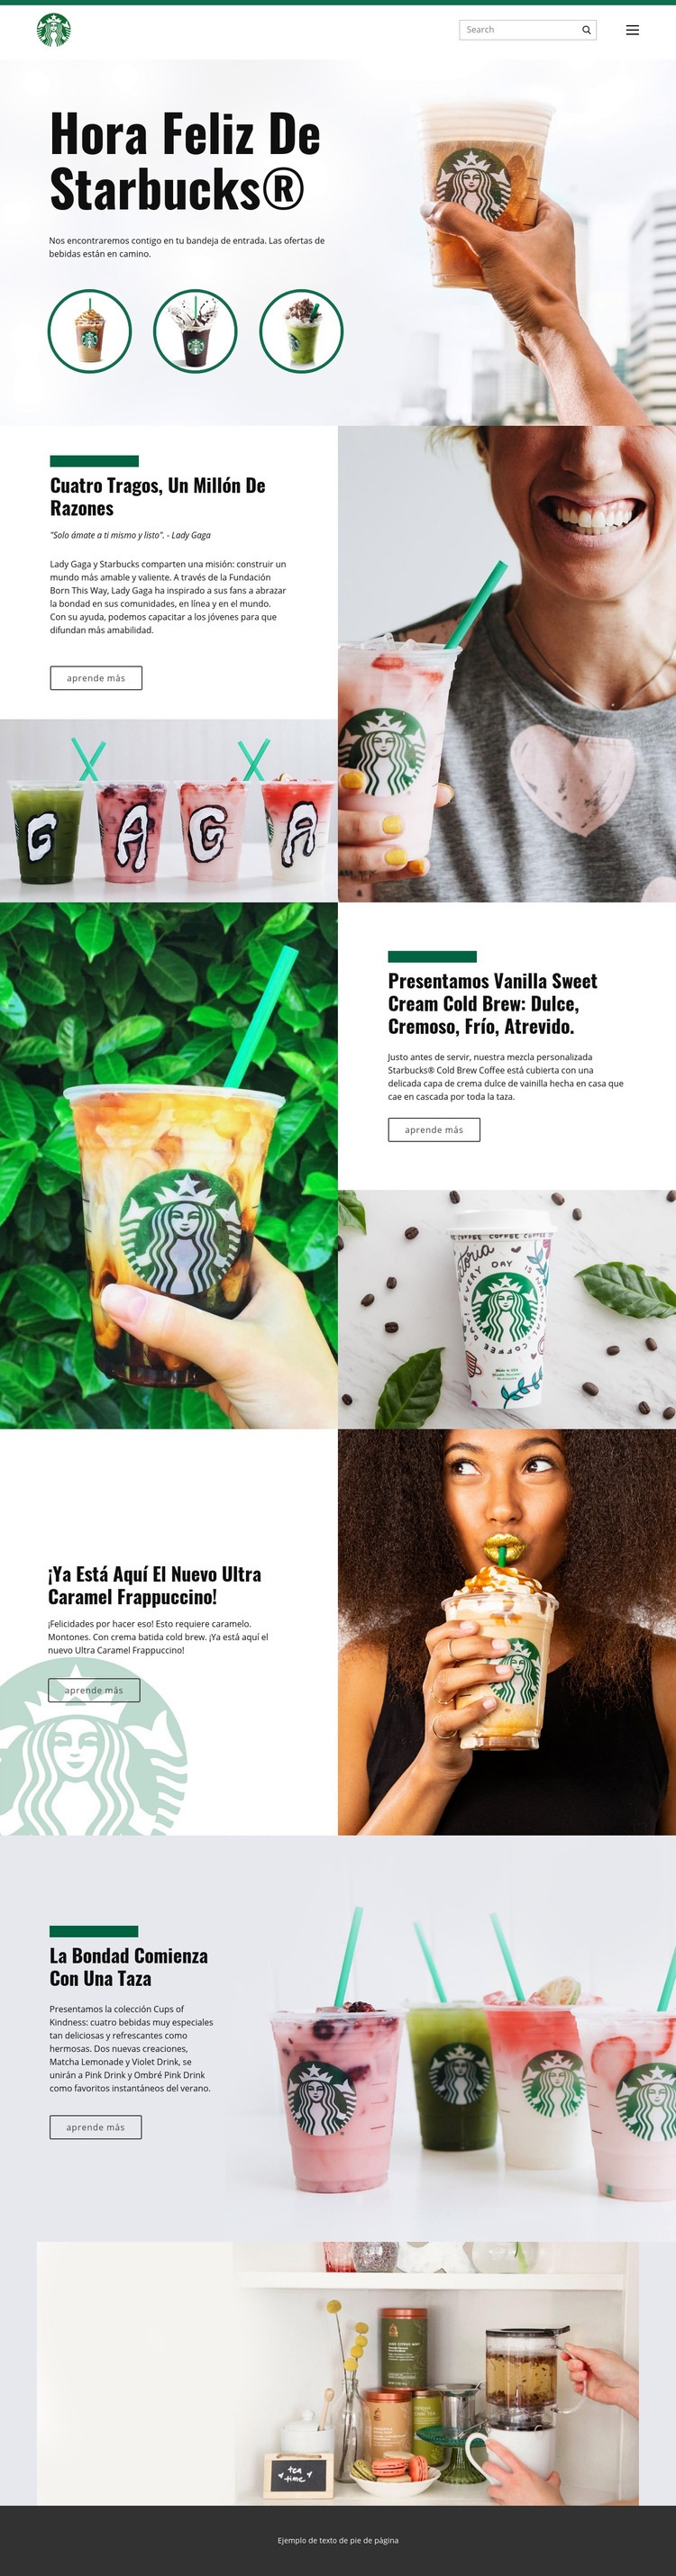 Café de Starbucks Plantillas de creación de sitios web